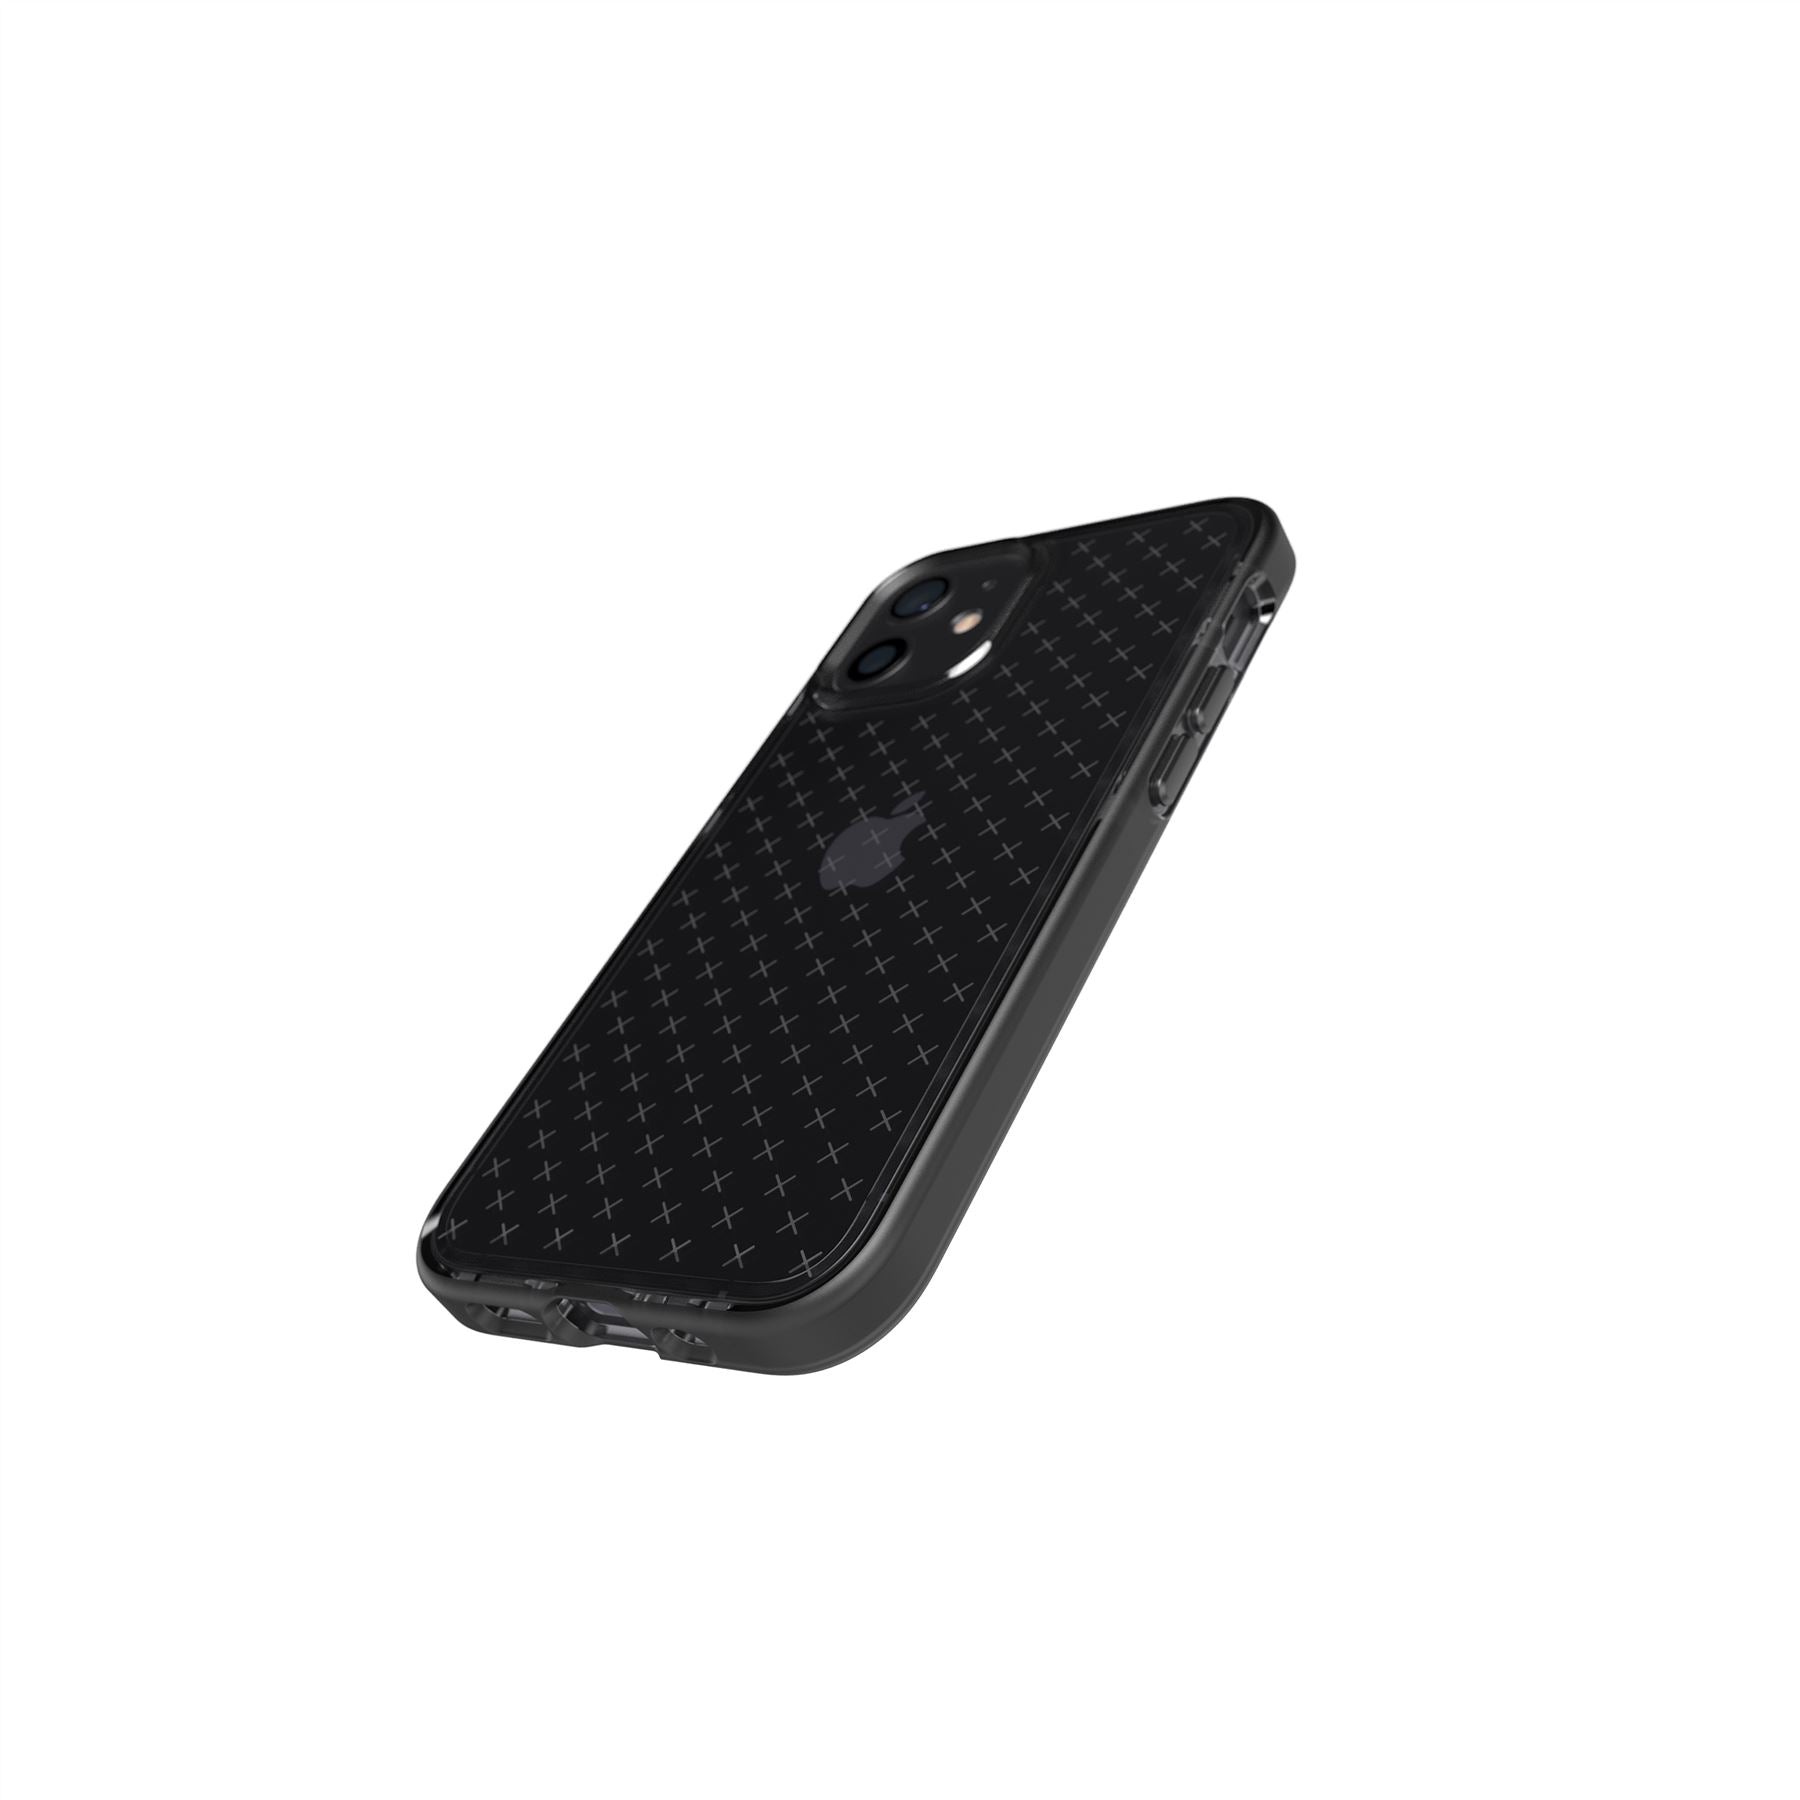 Evo Check - Apple iPhone 12 mini Case - Smokey Black | Tech21 - US